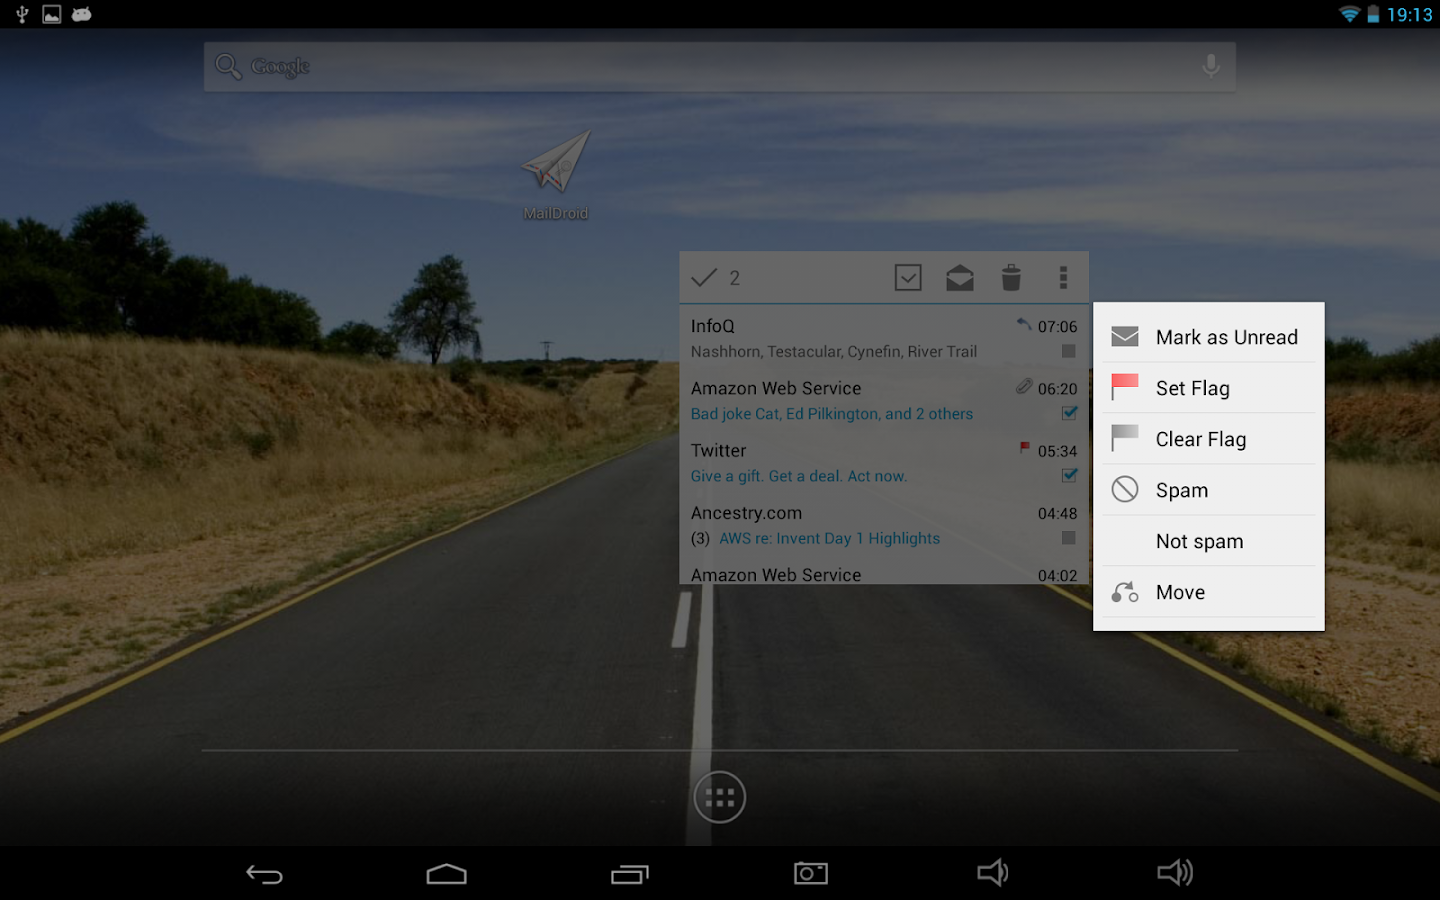    MailDroid Pro - Email App- screenshot  